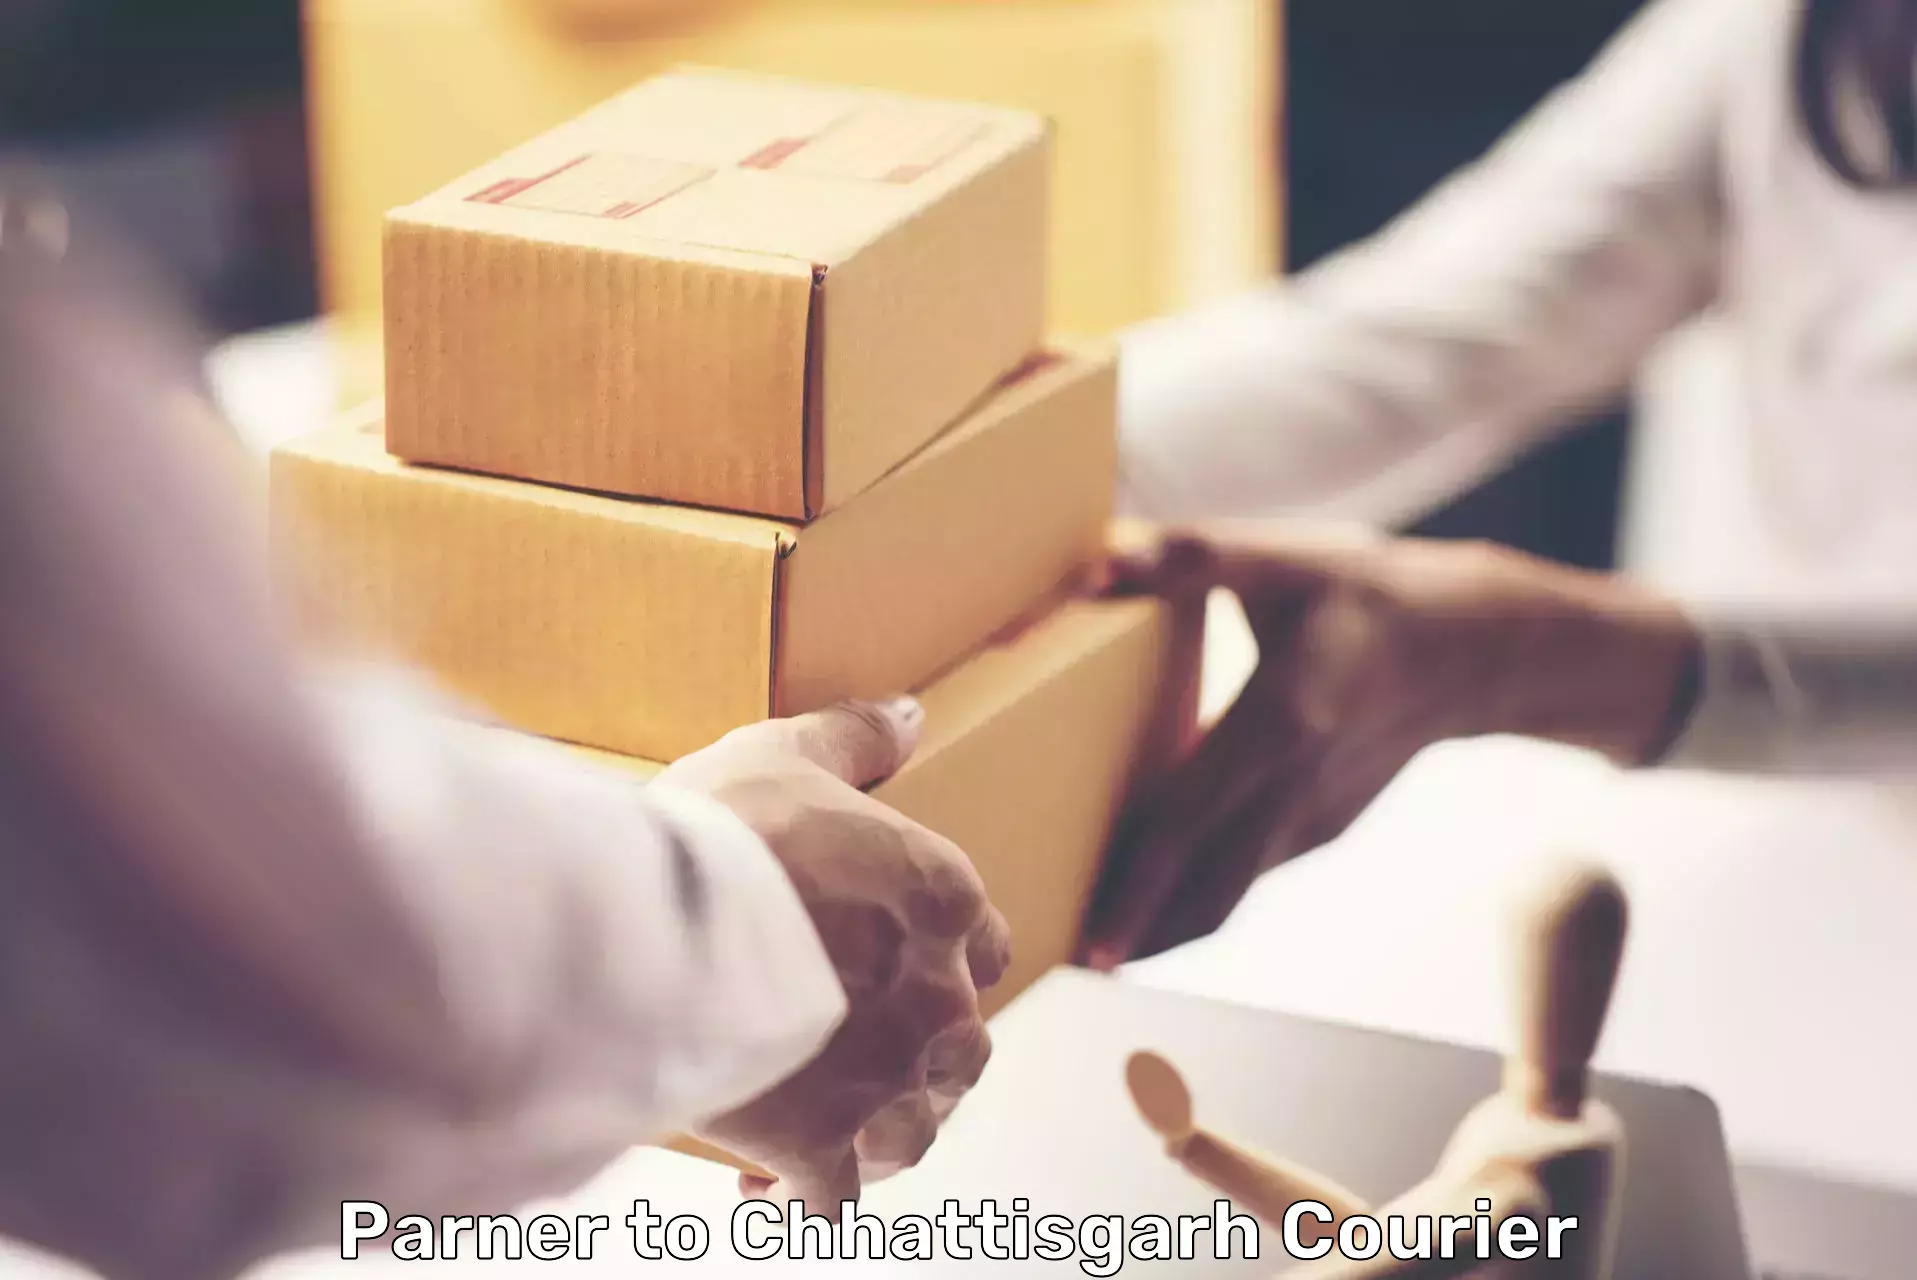 Courier service booking Parner to Chhattisgarh